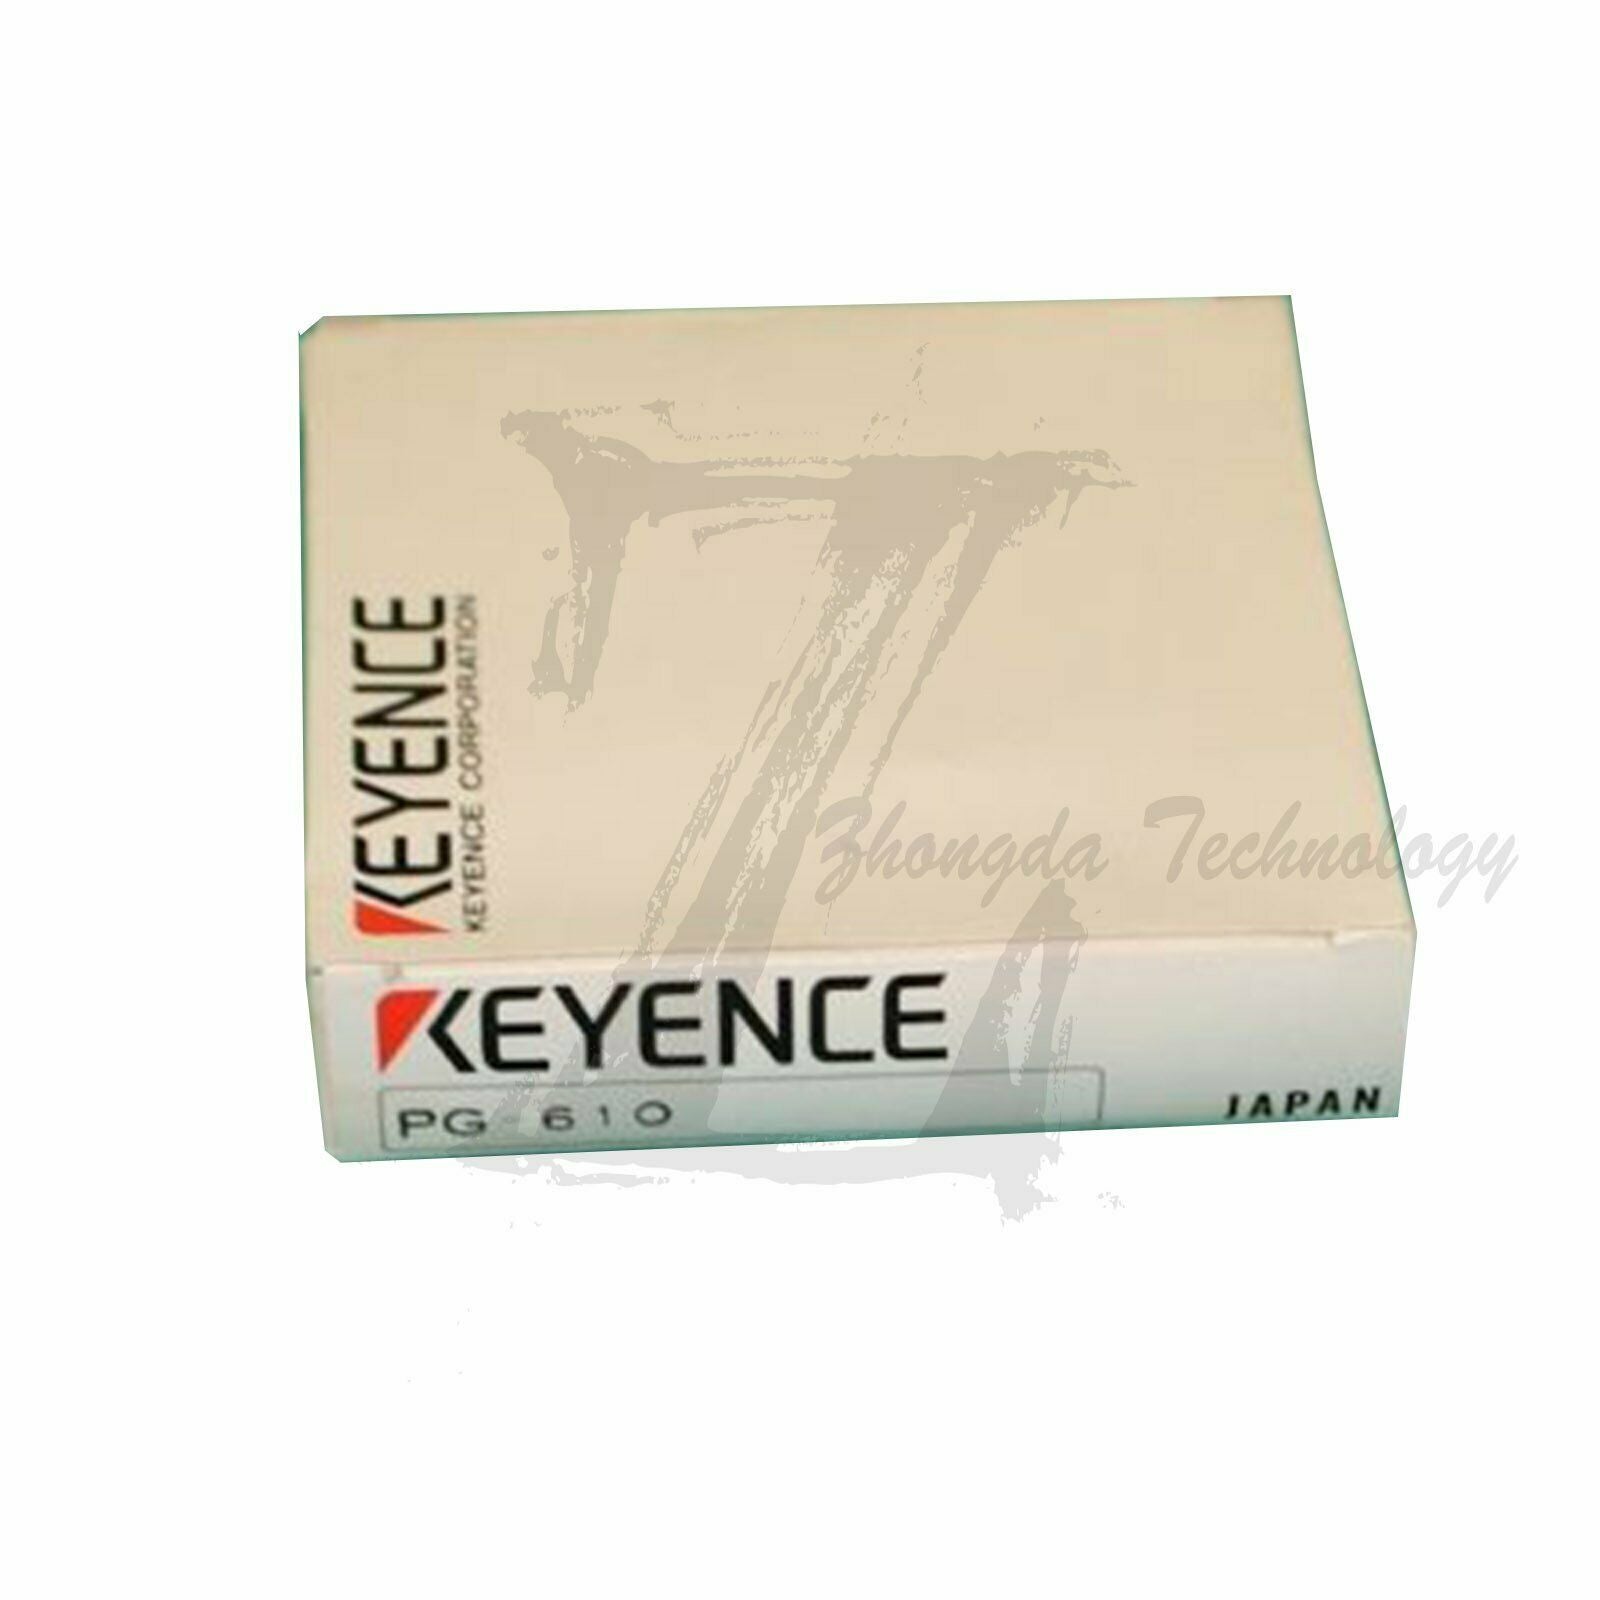 1pcs NEW KEYENCE PG-610 Photoelectric Sensors KOEED 201-500, 90%, import_2020_10_10_031751, Keyence, Other, validate-product-description